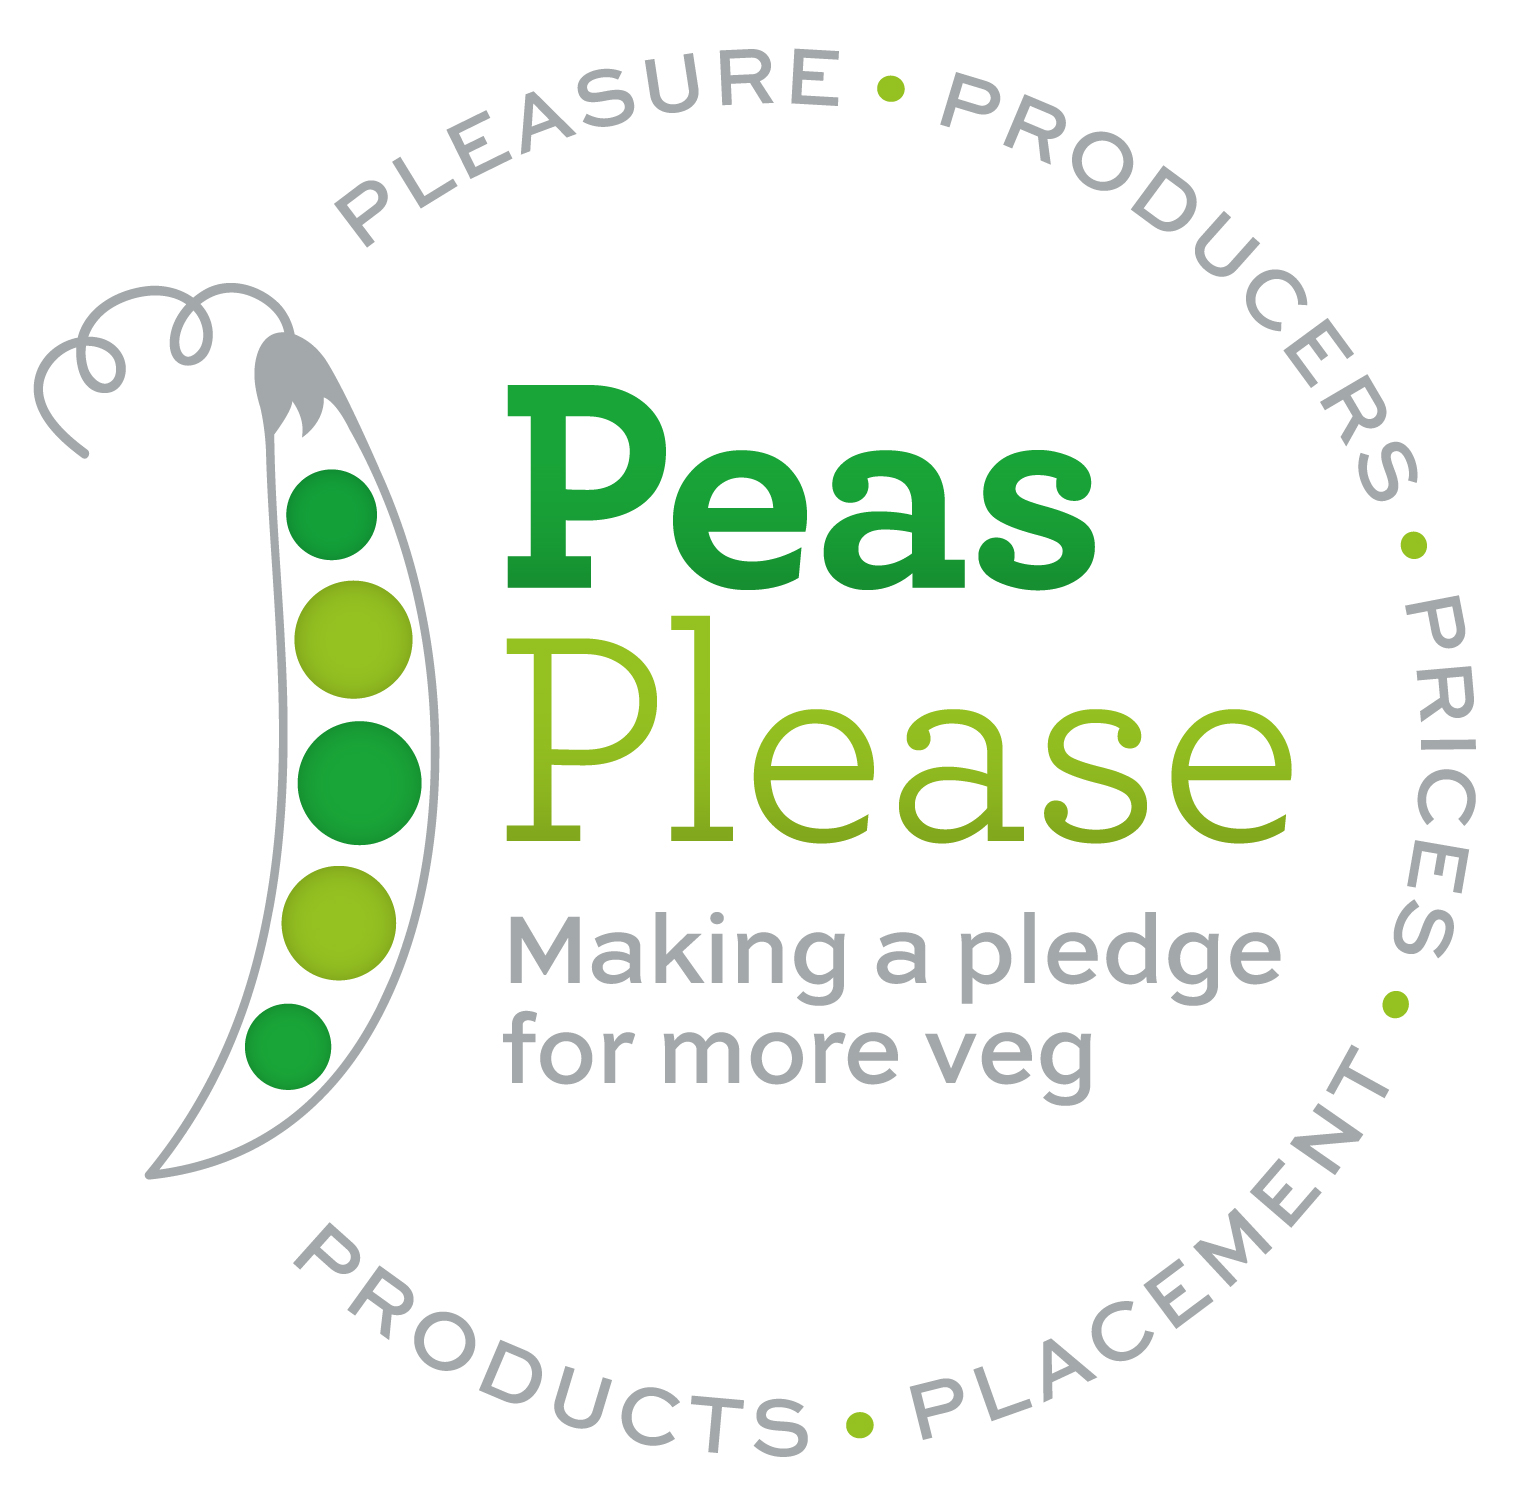 Peas Please | Making a pledge for more veg